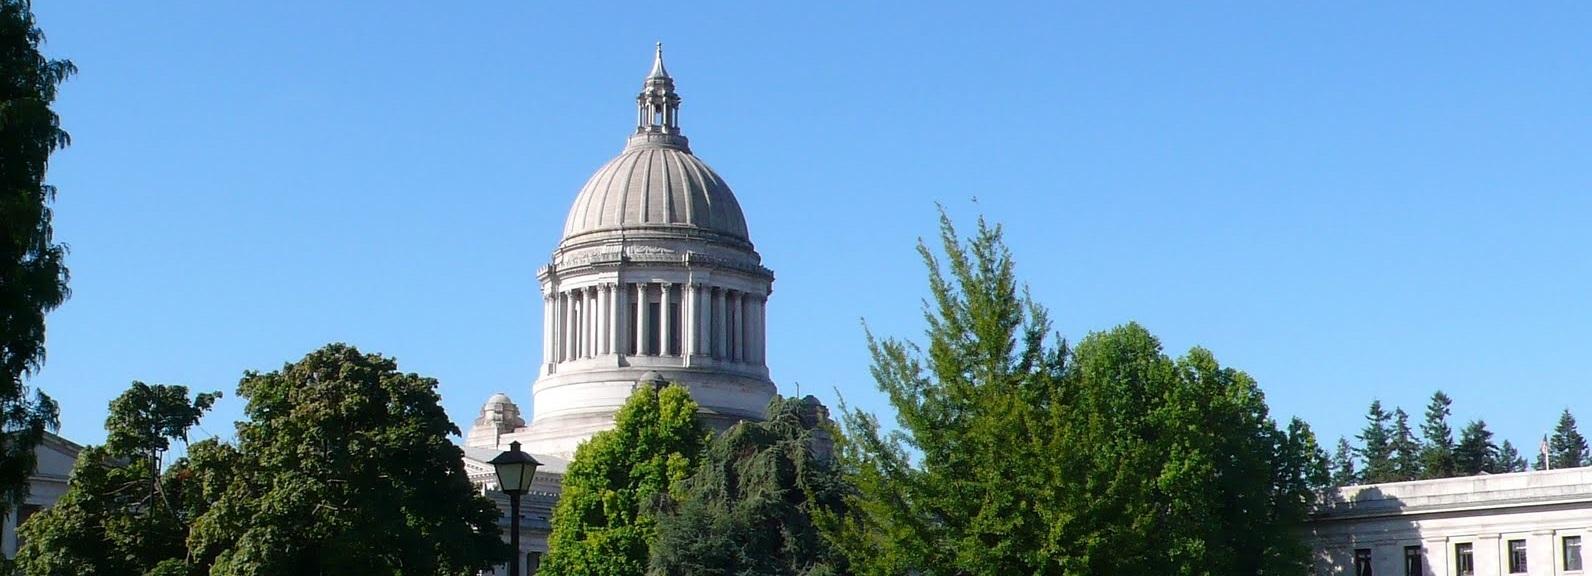 The Washington state Capitol